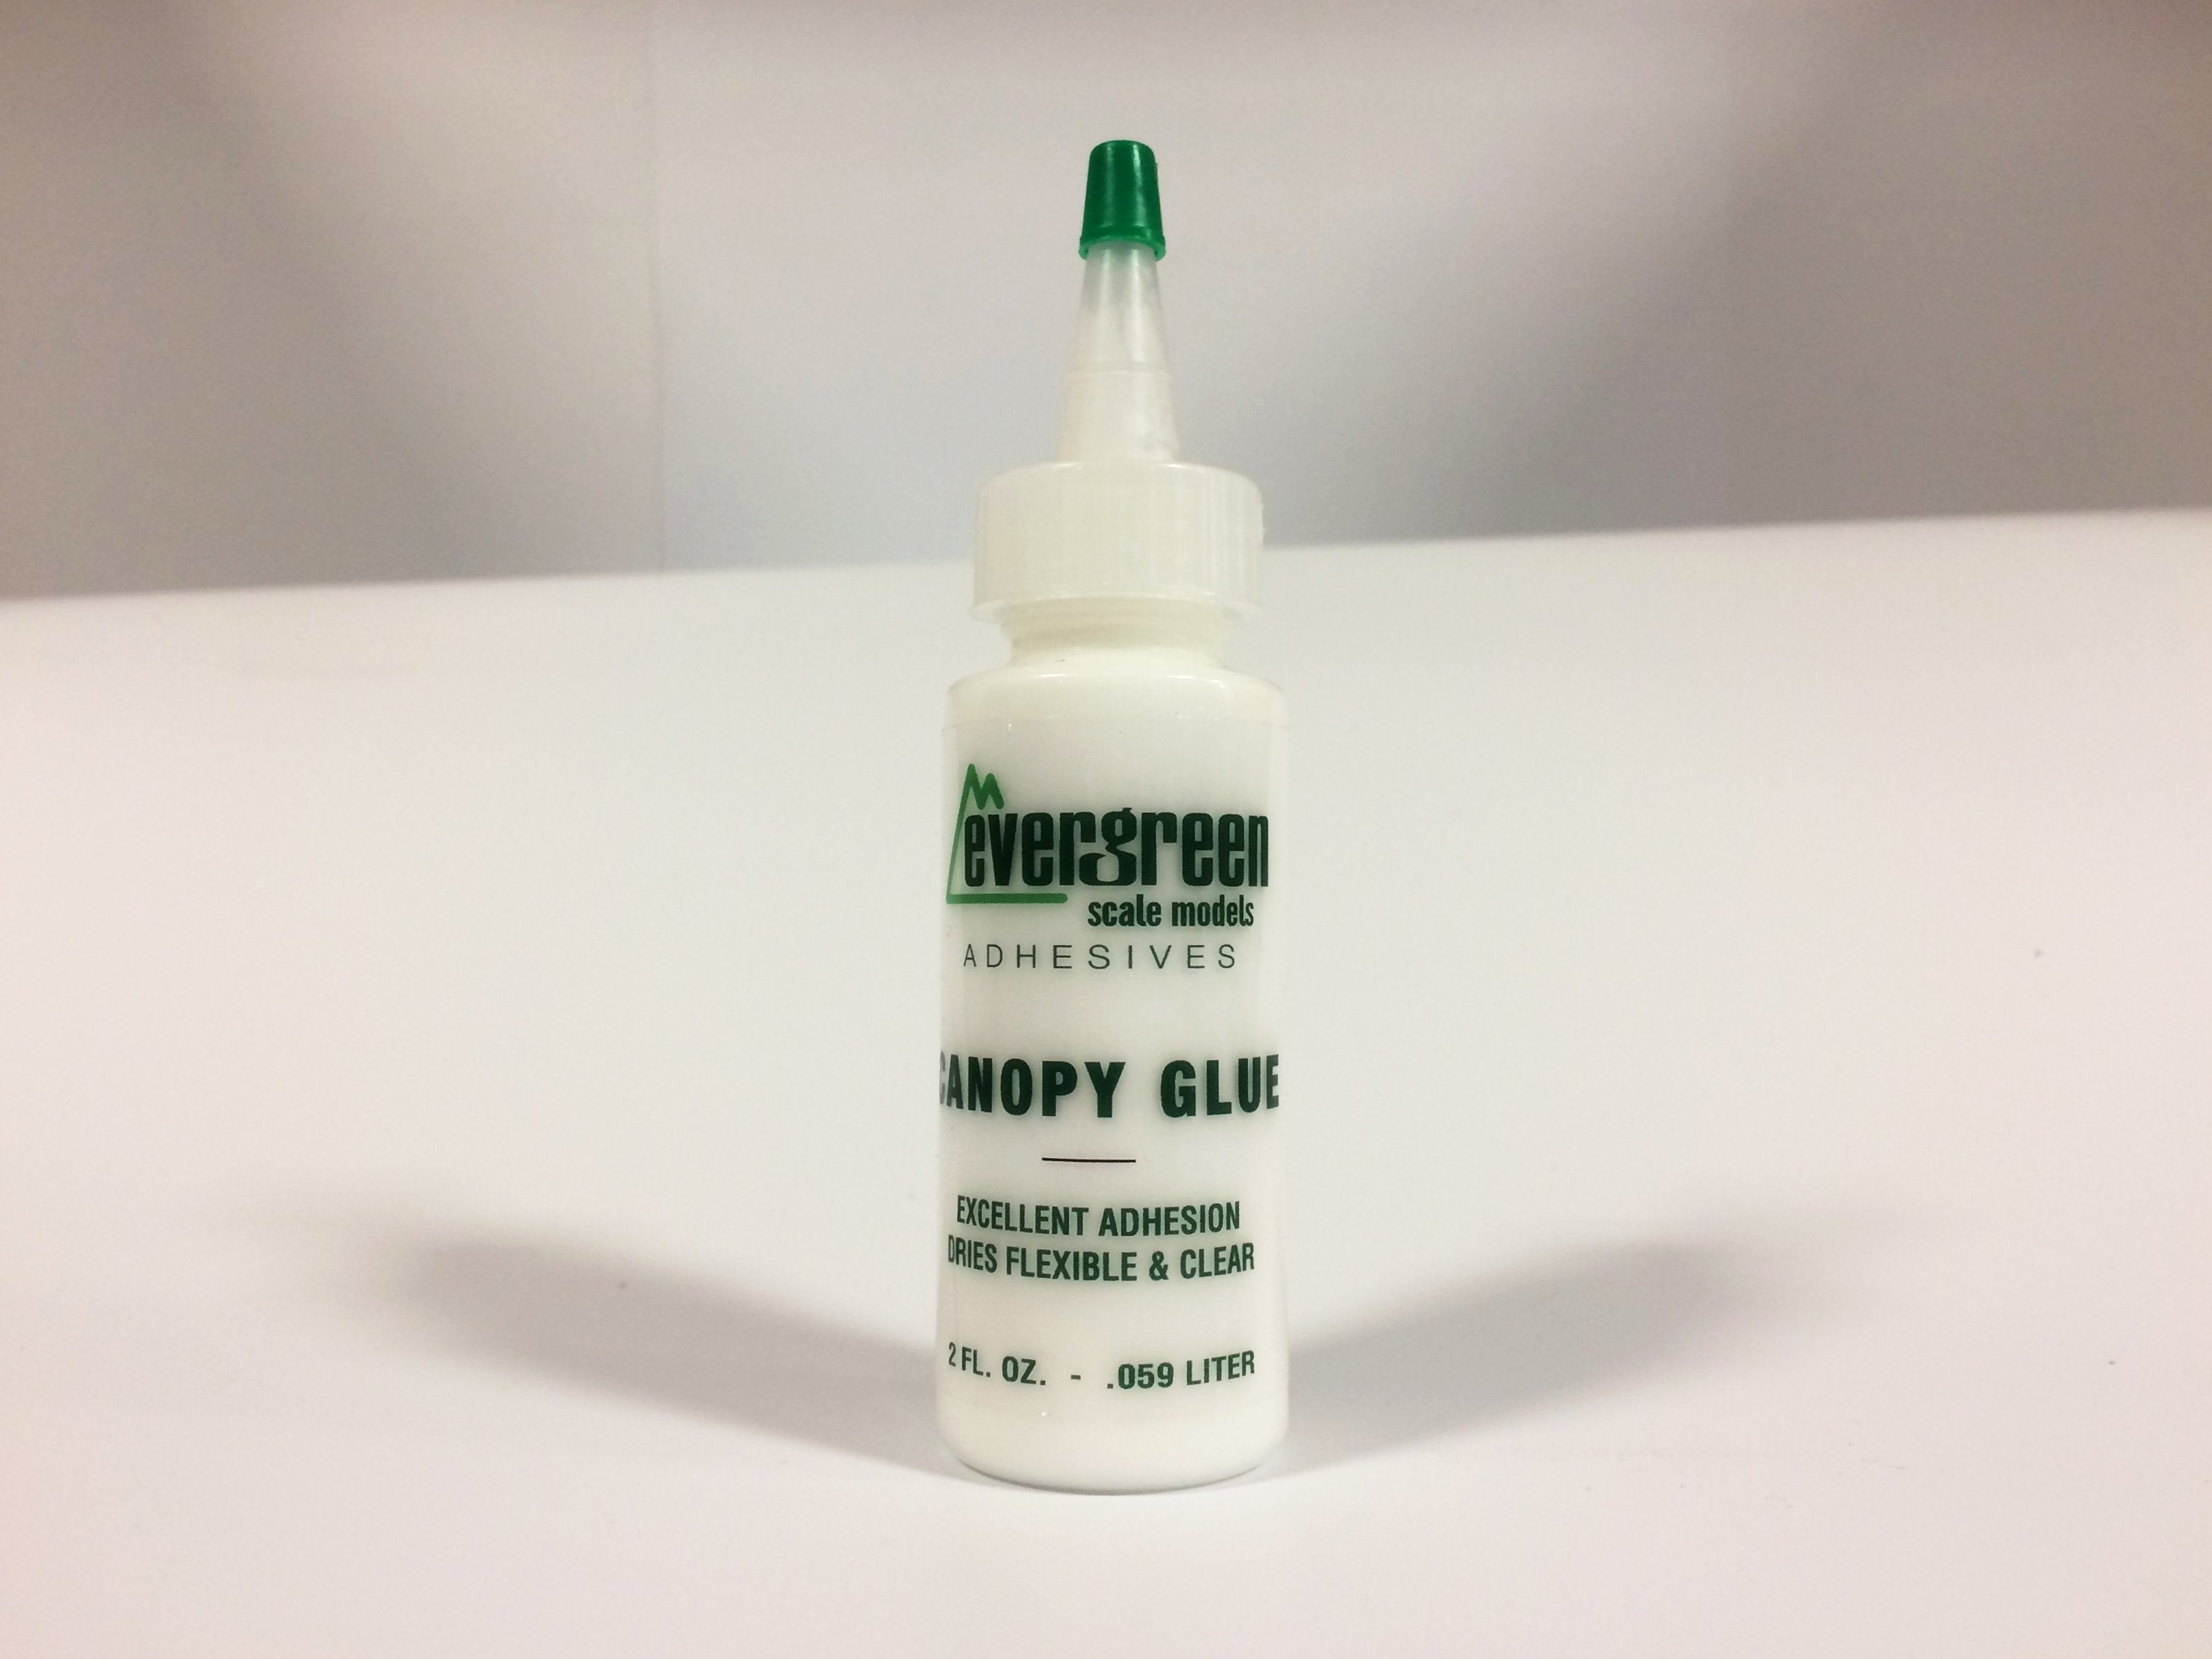 81 Evergreen Premium White Wood Glue 2 Ounce Bottle - Evergreen